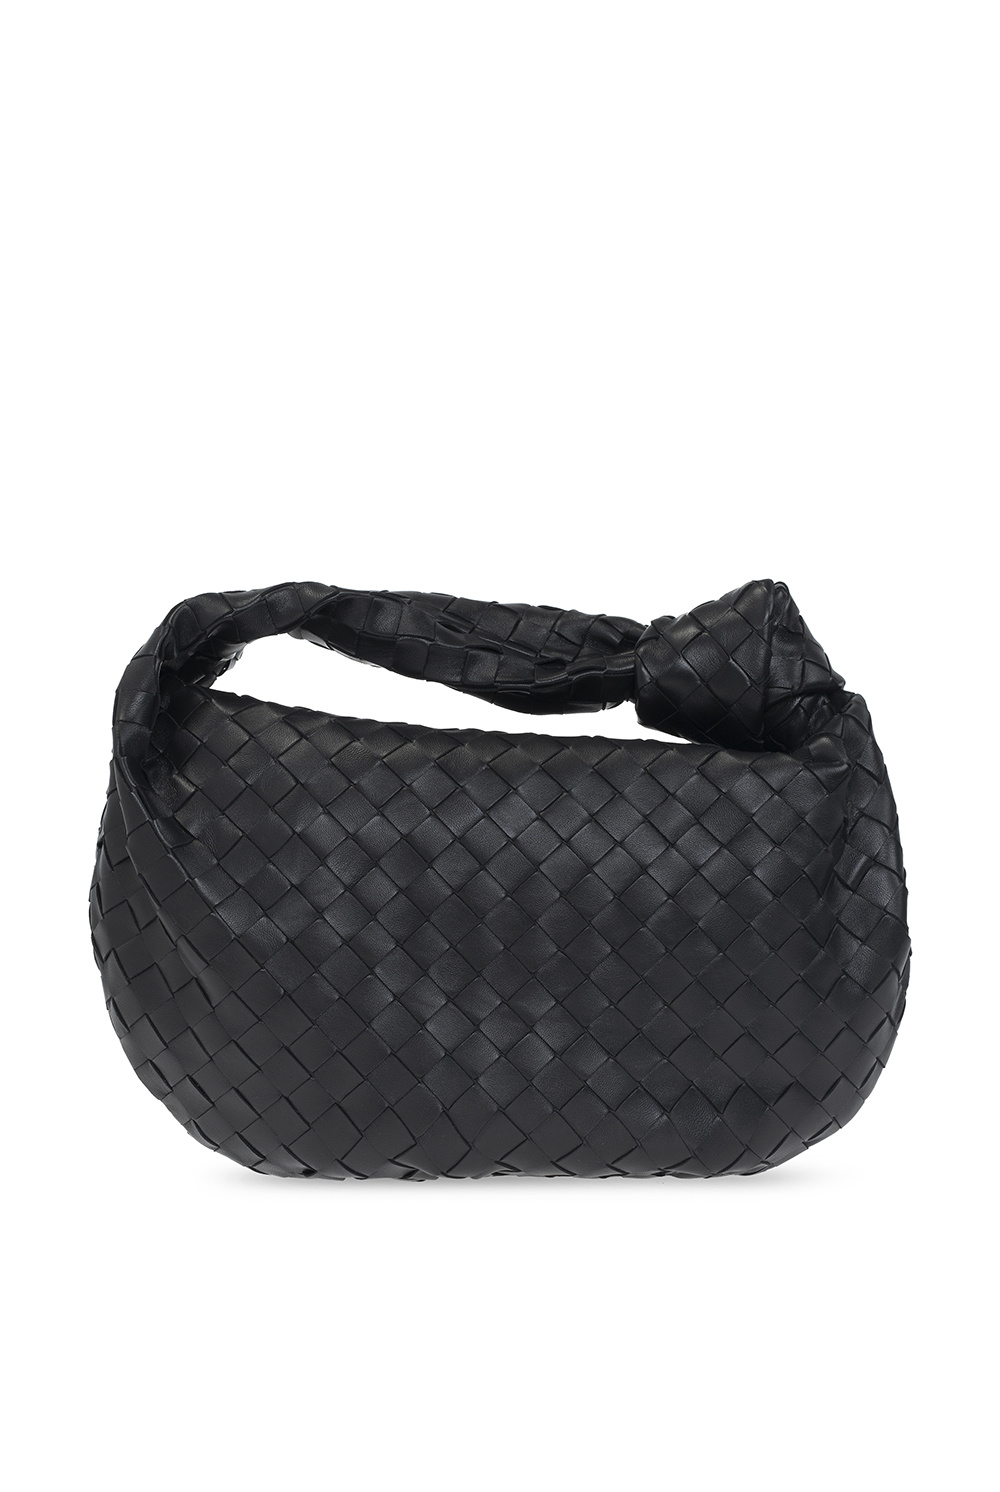 IetpShops GB - bottega veneta bv fold leather shoulder bag - 'Loop